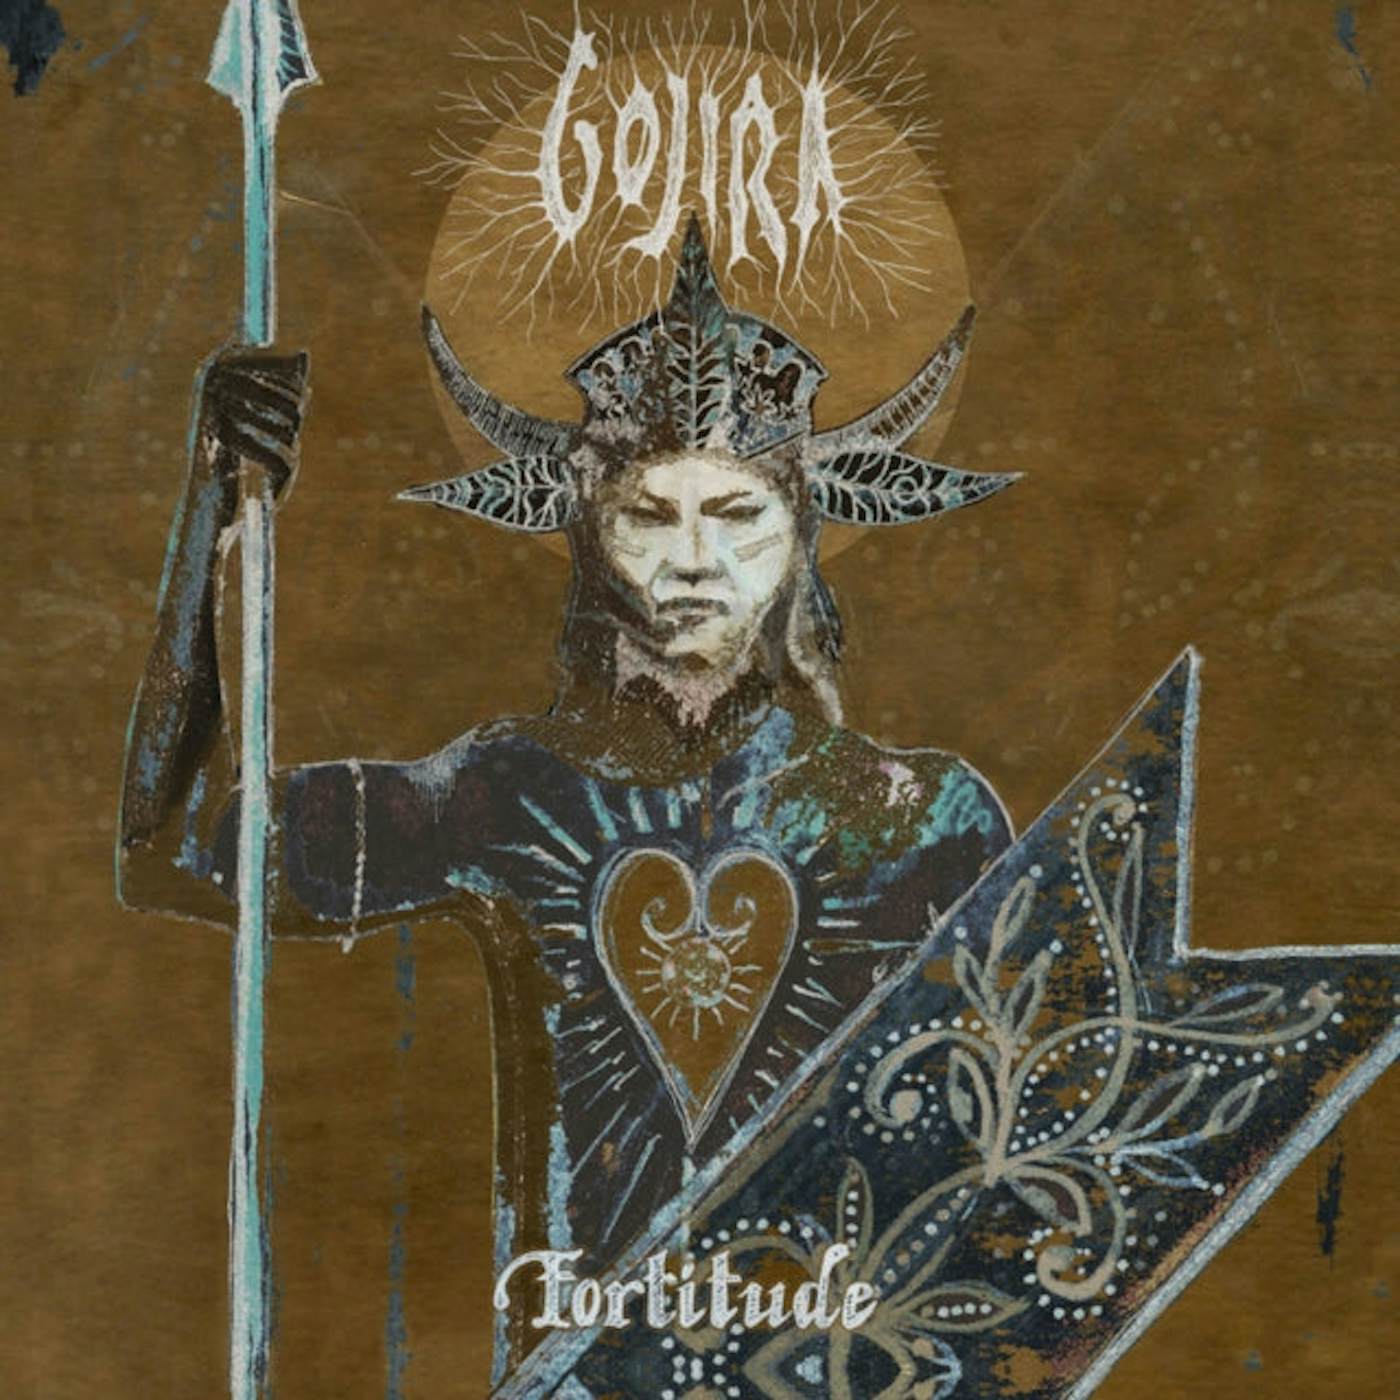 Gojira LP Vinyl Record - Fortitude